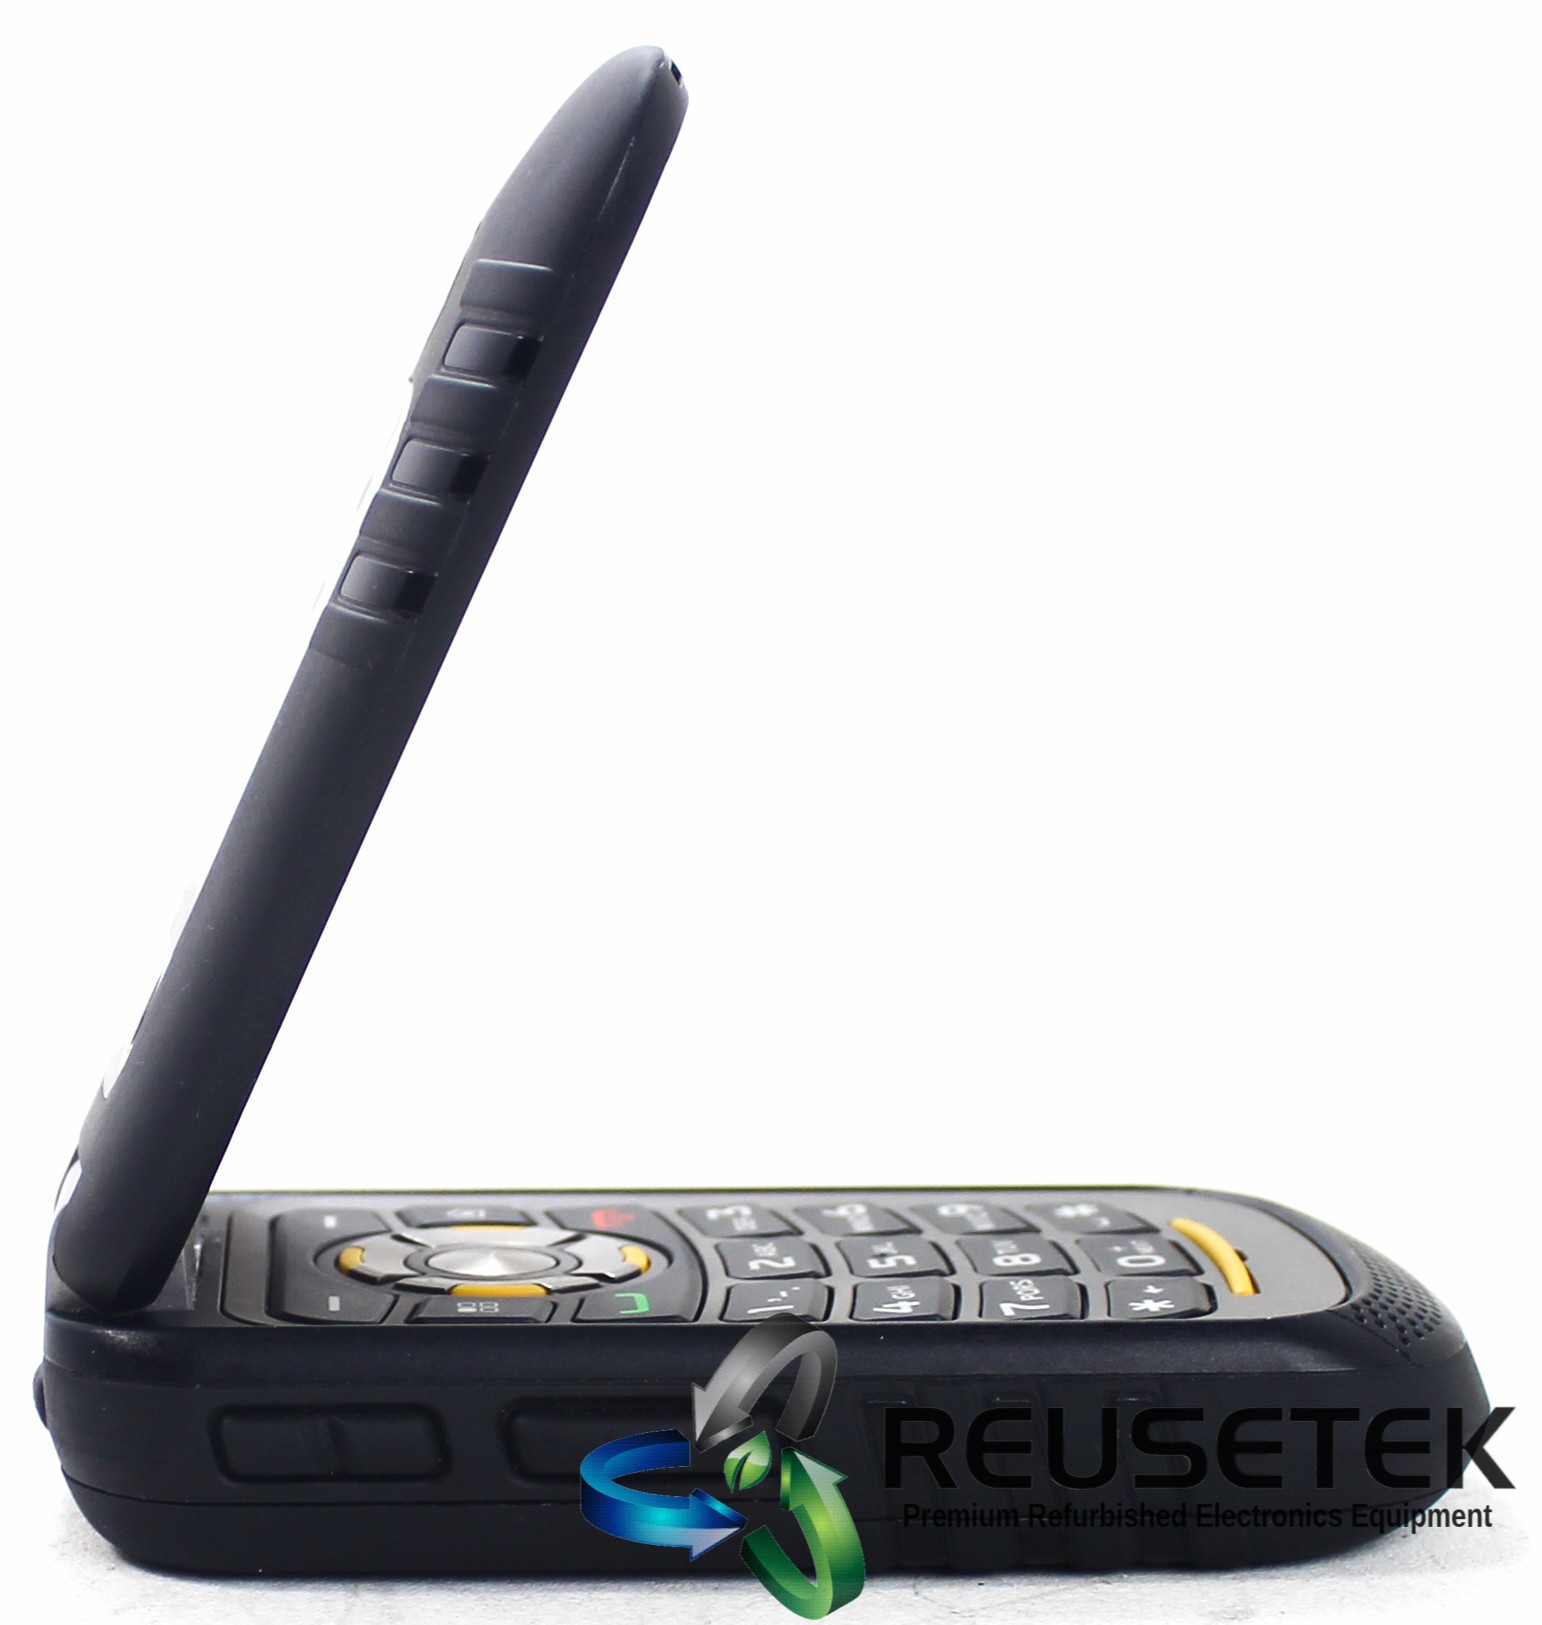 500030334-Motorola Brute i686 Sprint Black Cell Phone -image